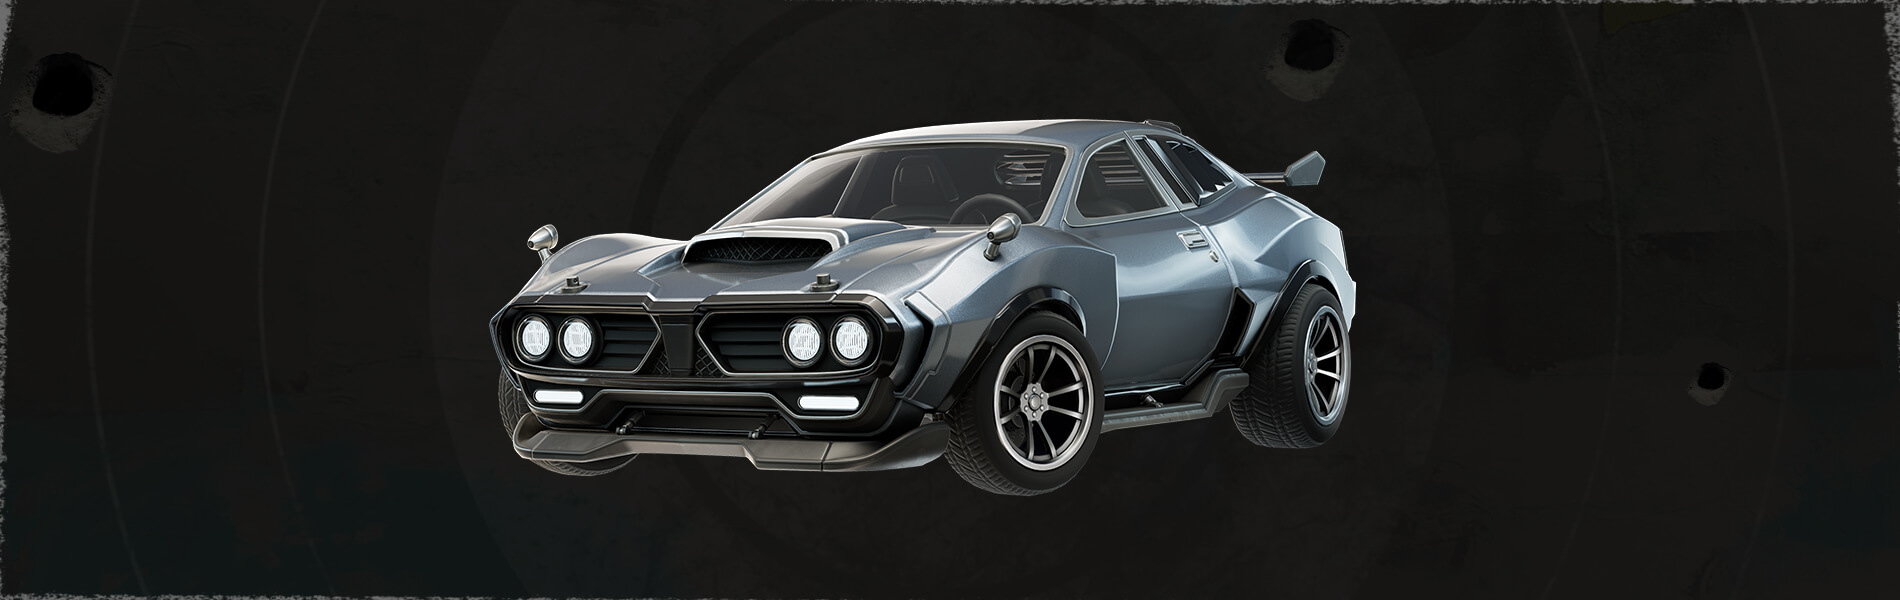 Fortnite Scorpion Car Body